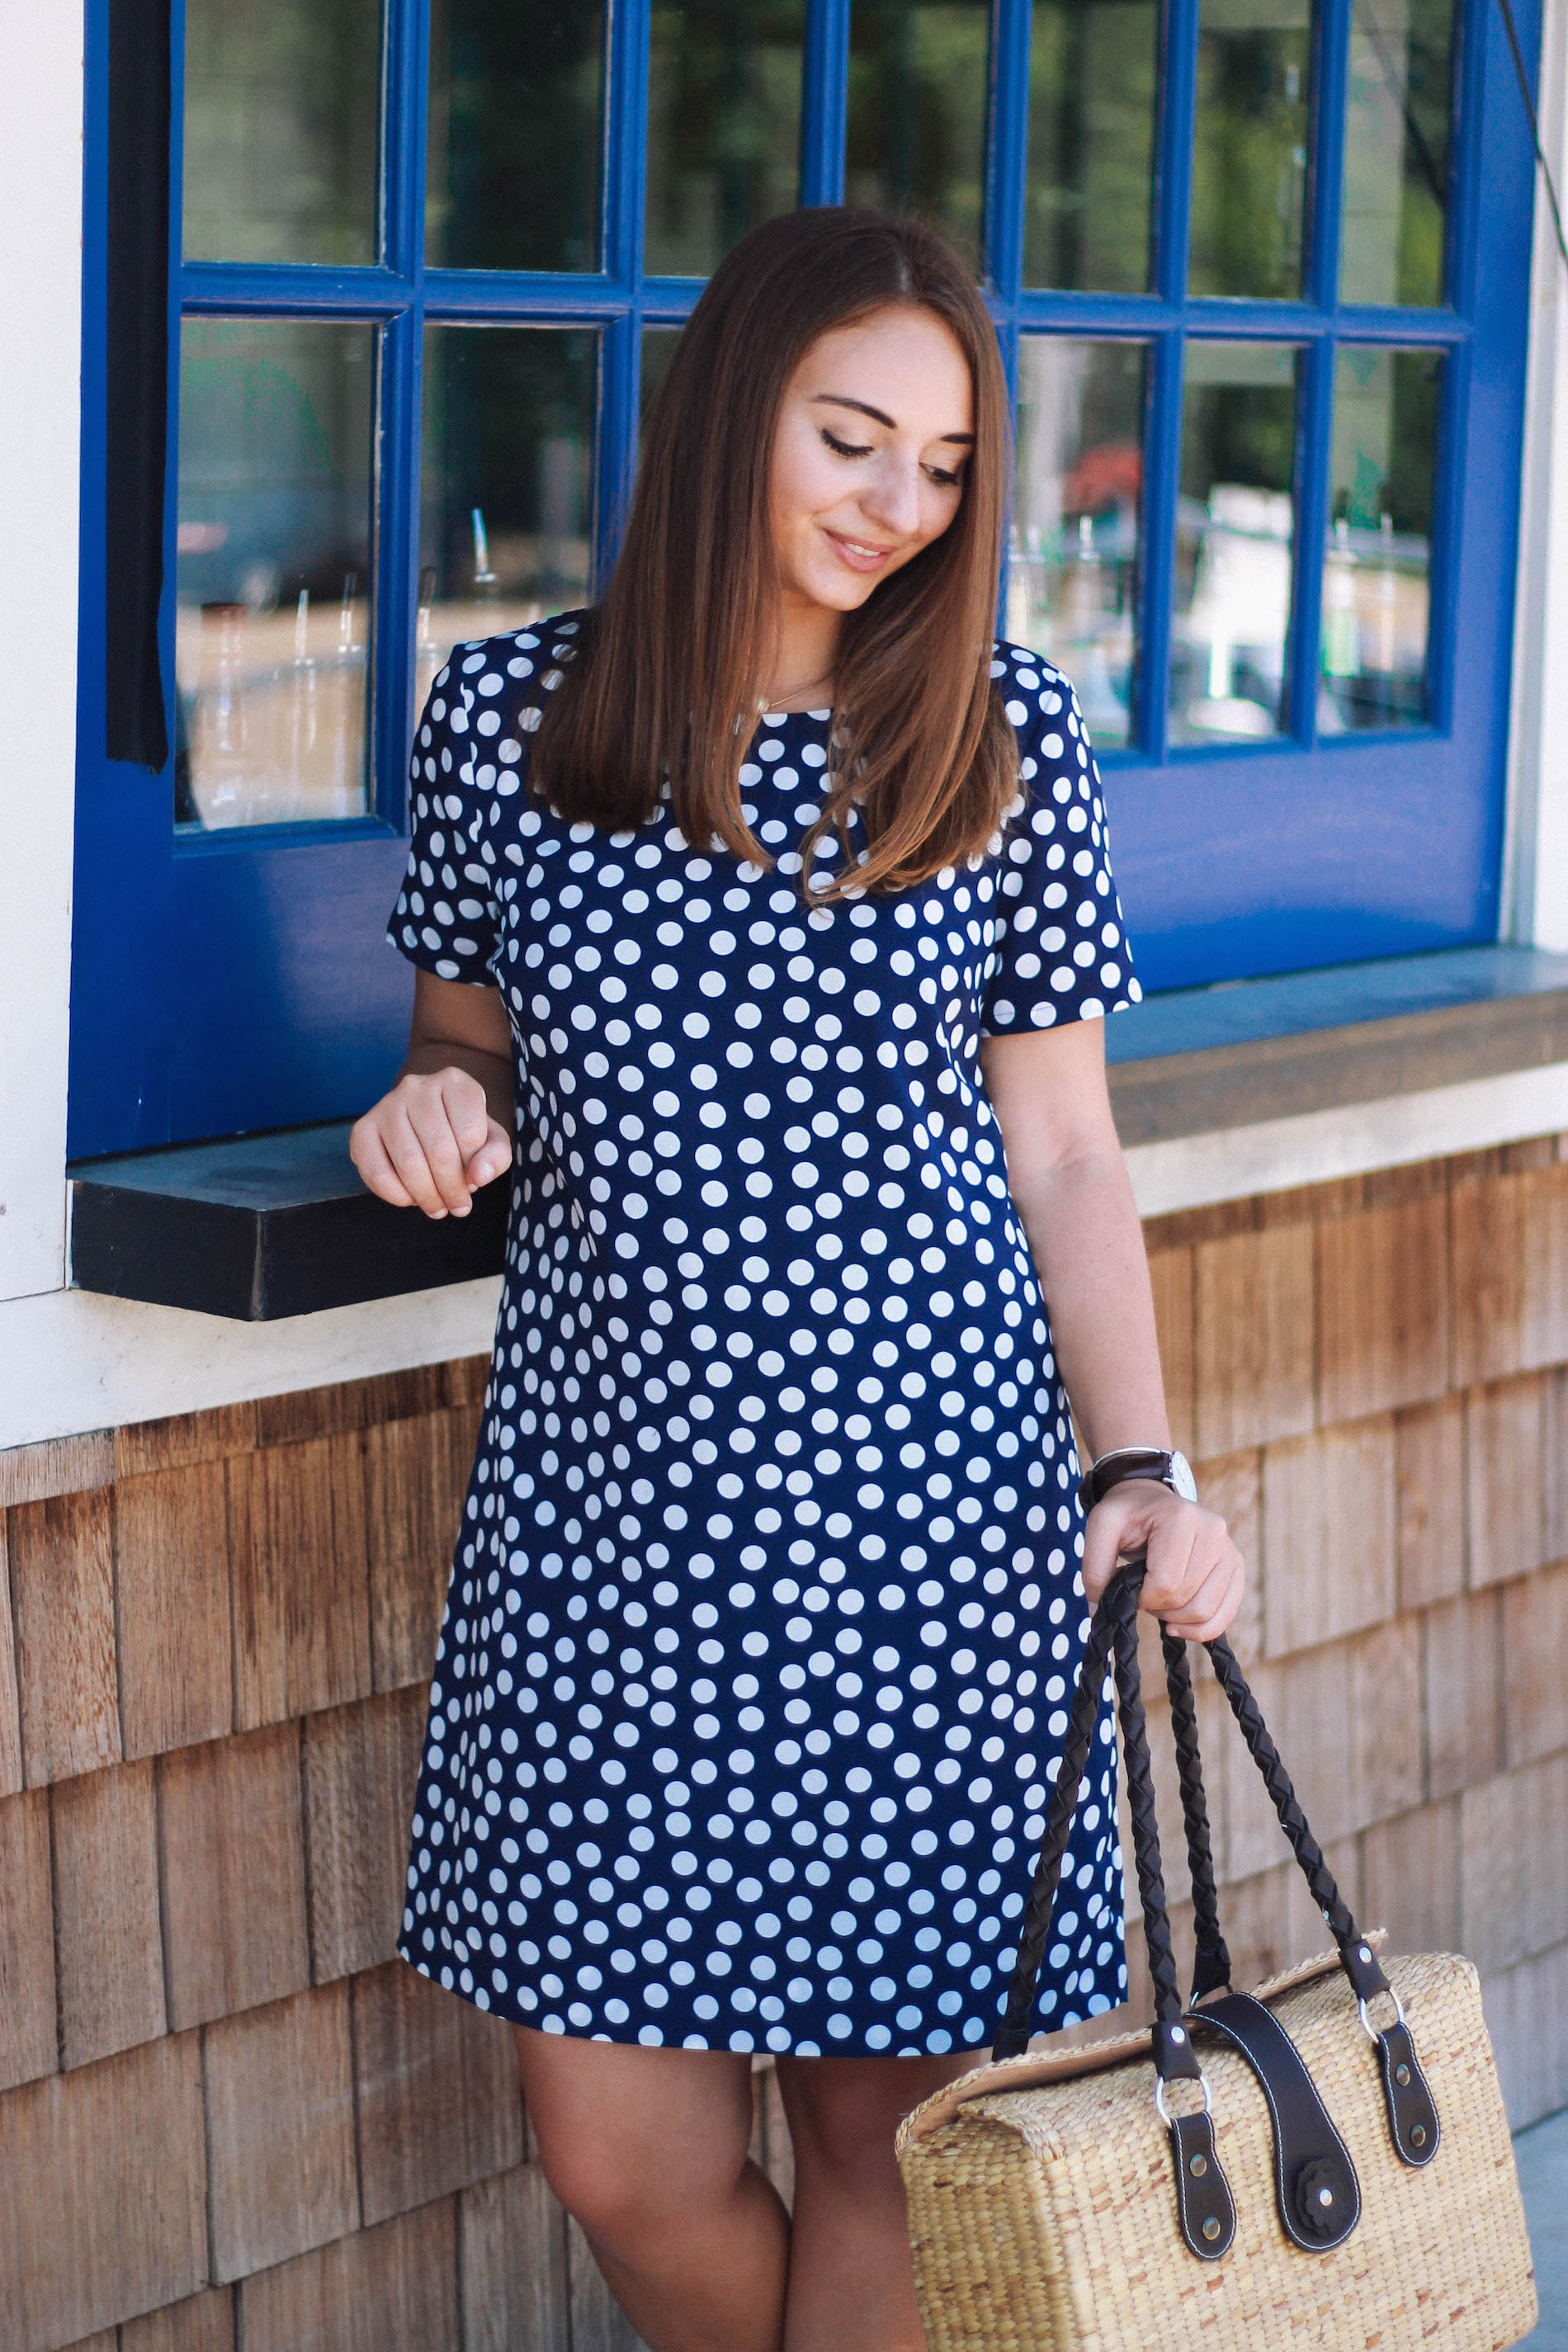 Polka Dot Dress fo Business Casual on the Go | The Coastal Confidence by Aubrey Yandow